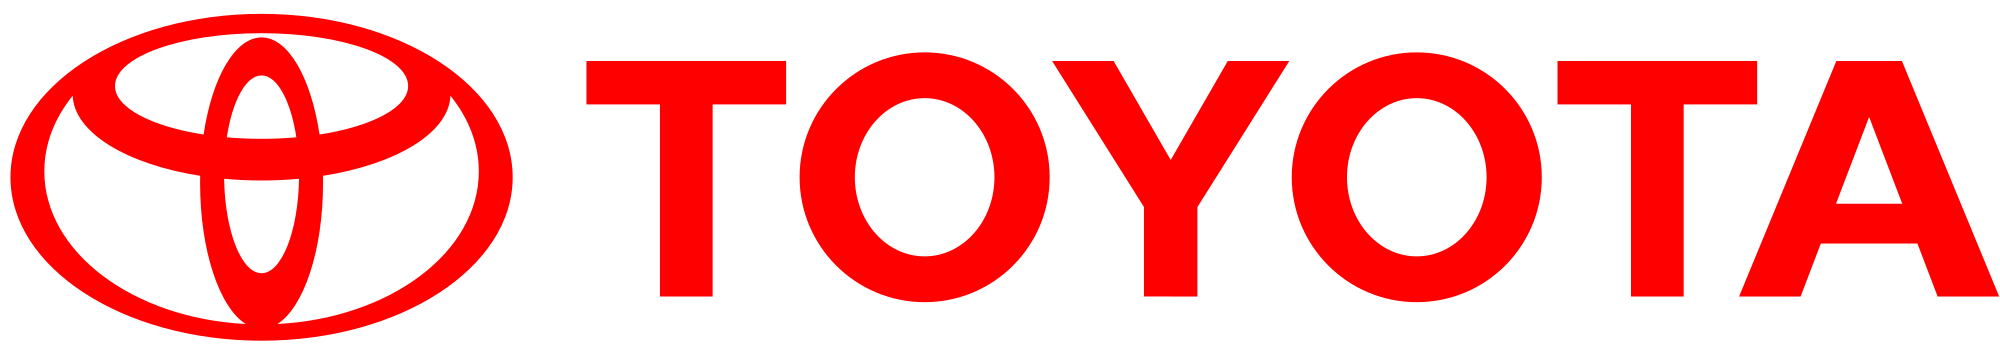 Toyota Car Logo - Toyota carlogo.svg